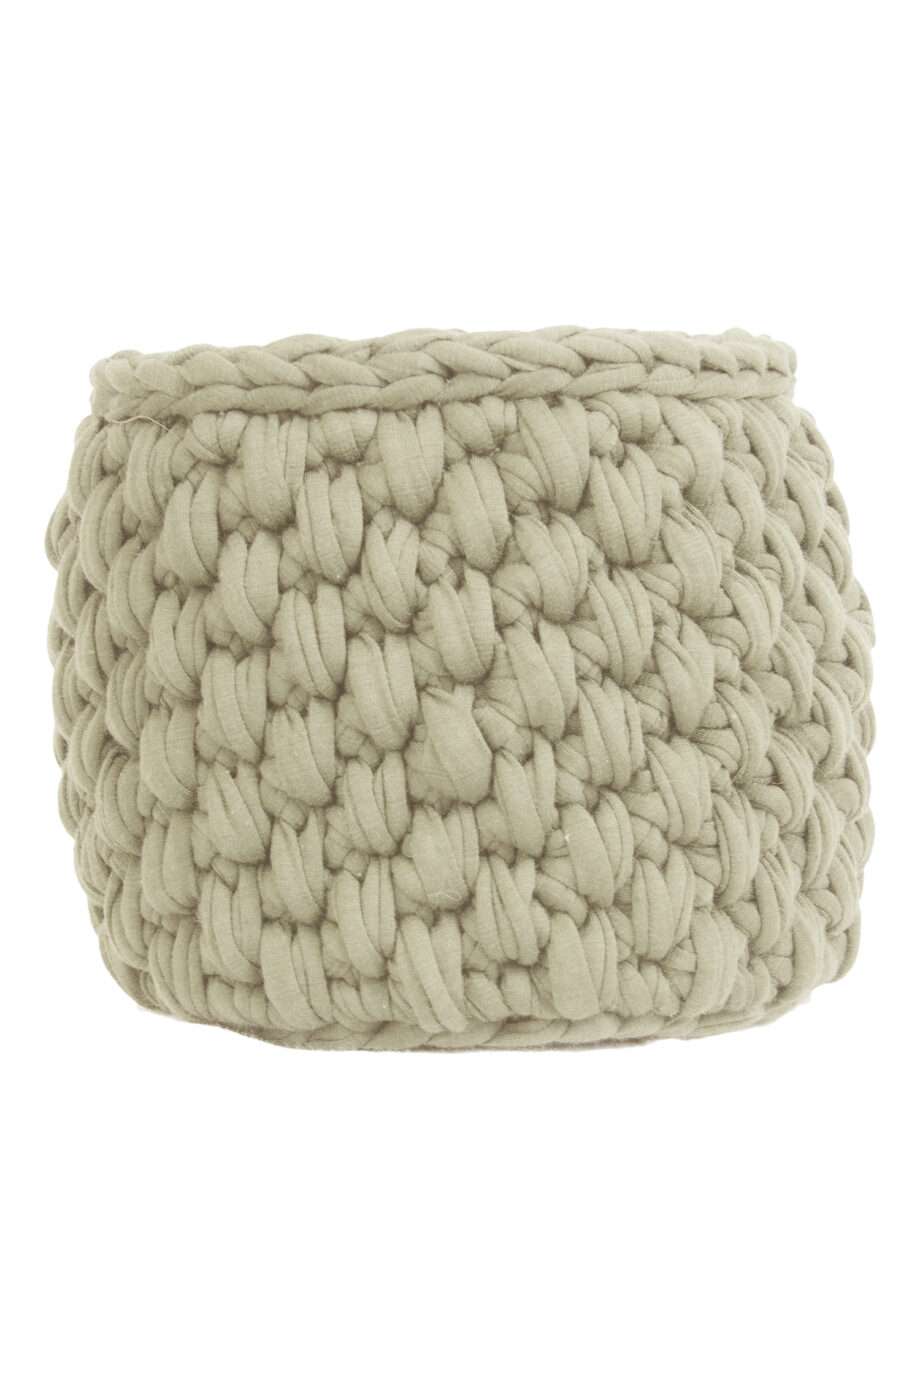 peony off-white crochet cotton basket small